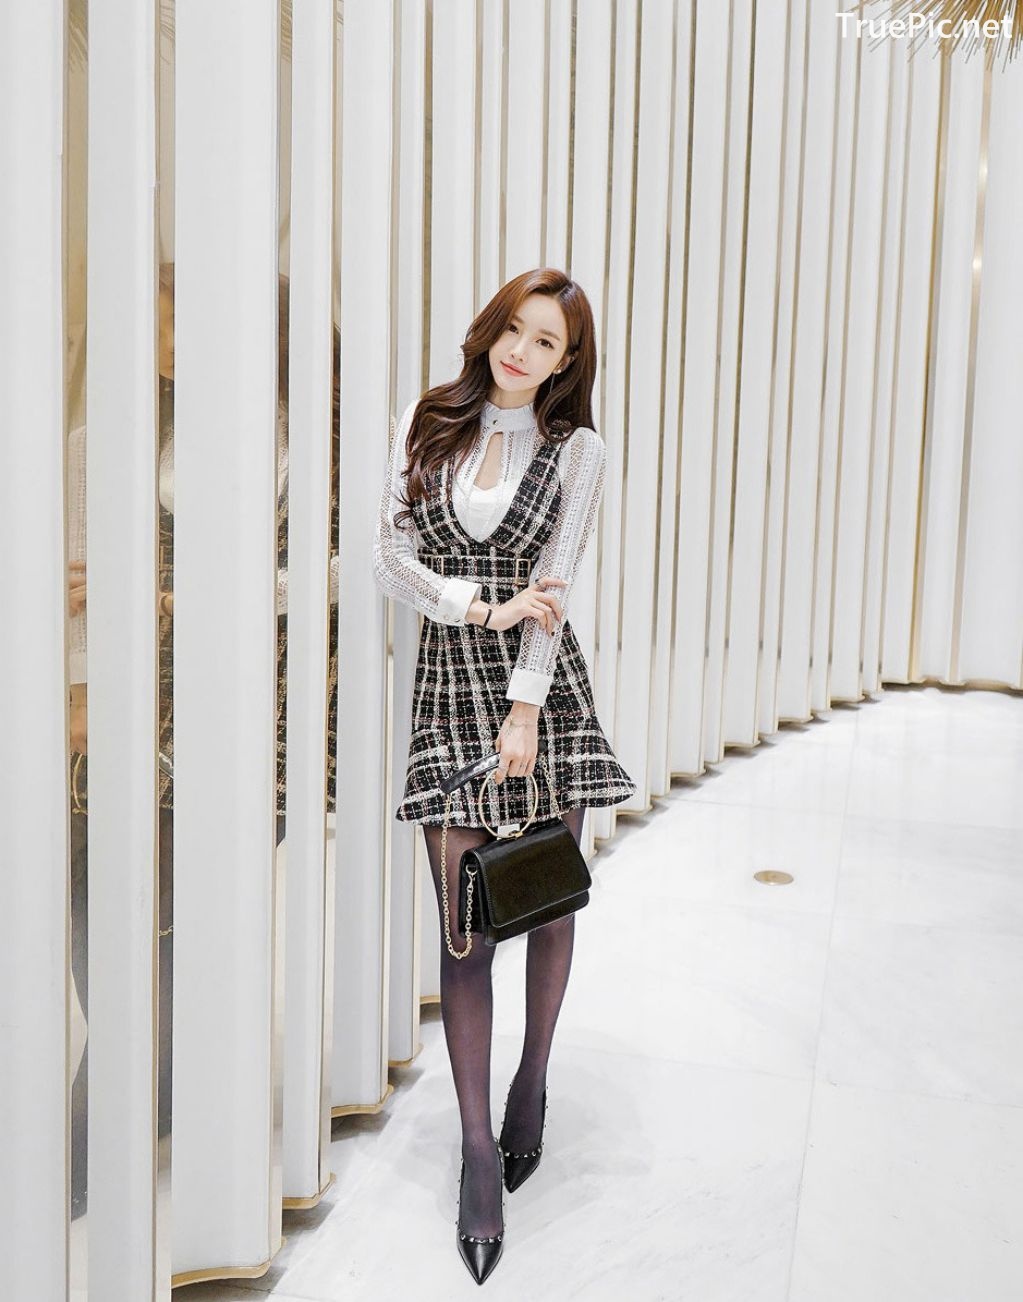 Image Son Yoon Joo Beautiful Photos – Korean Fashion Collection #3 - TruePic.net - Picture-93